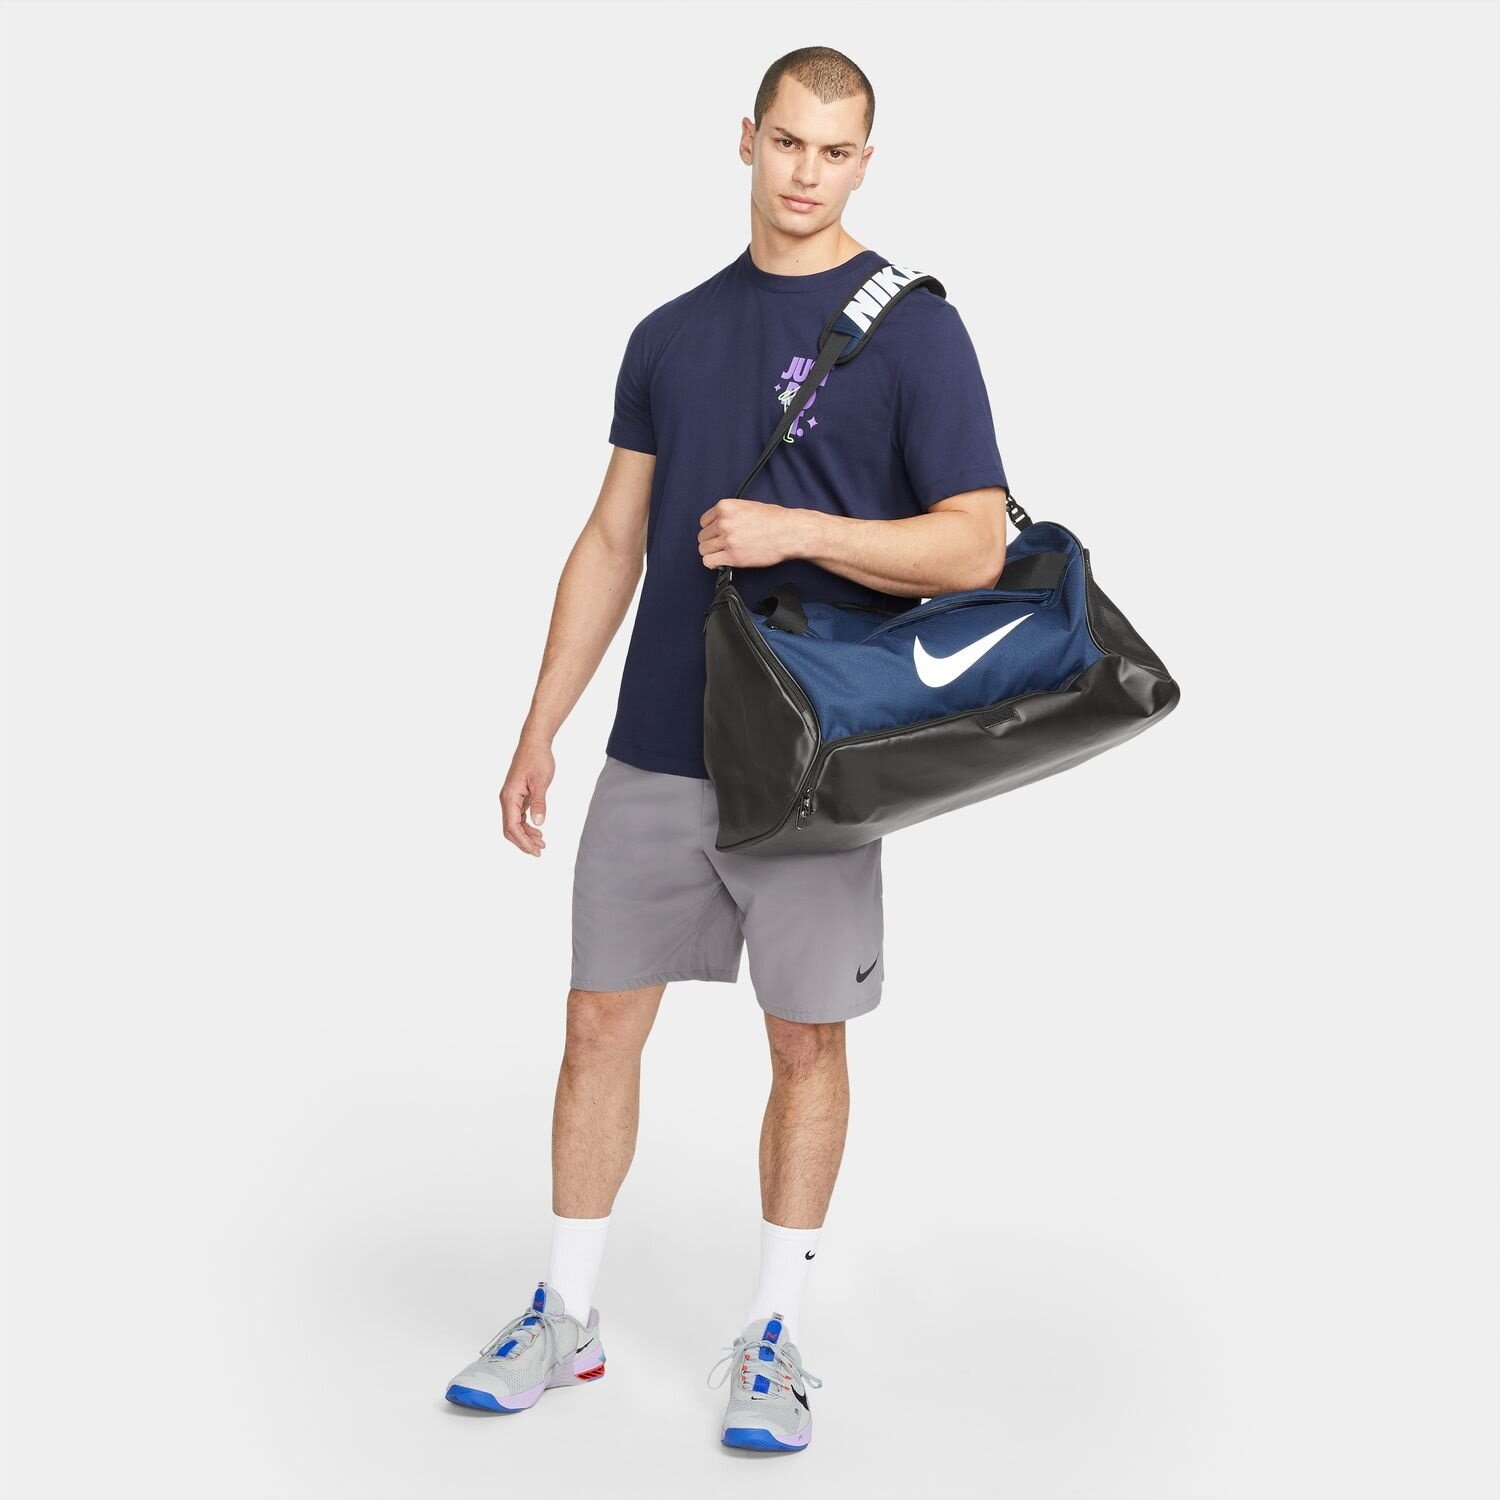 Nike Brasilia 9.5 Training Mens Backpack Medium Blue Size 24 Litre